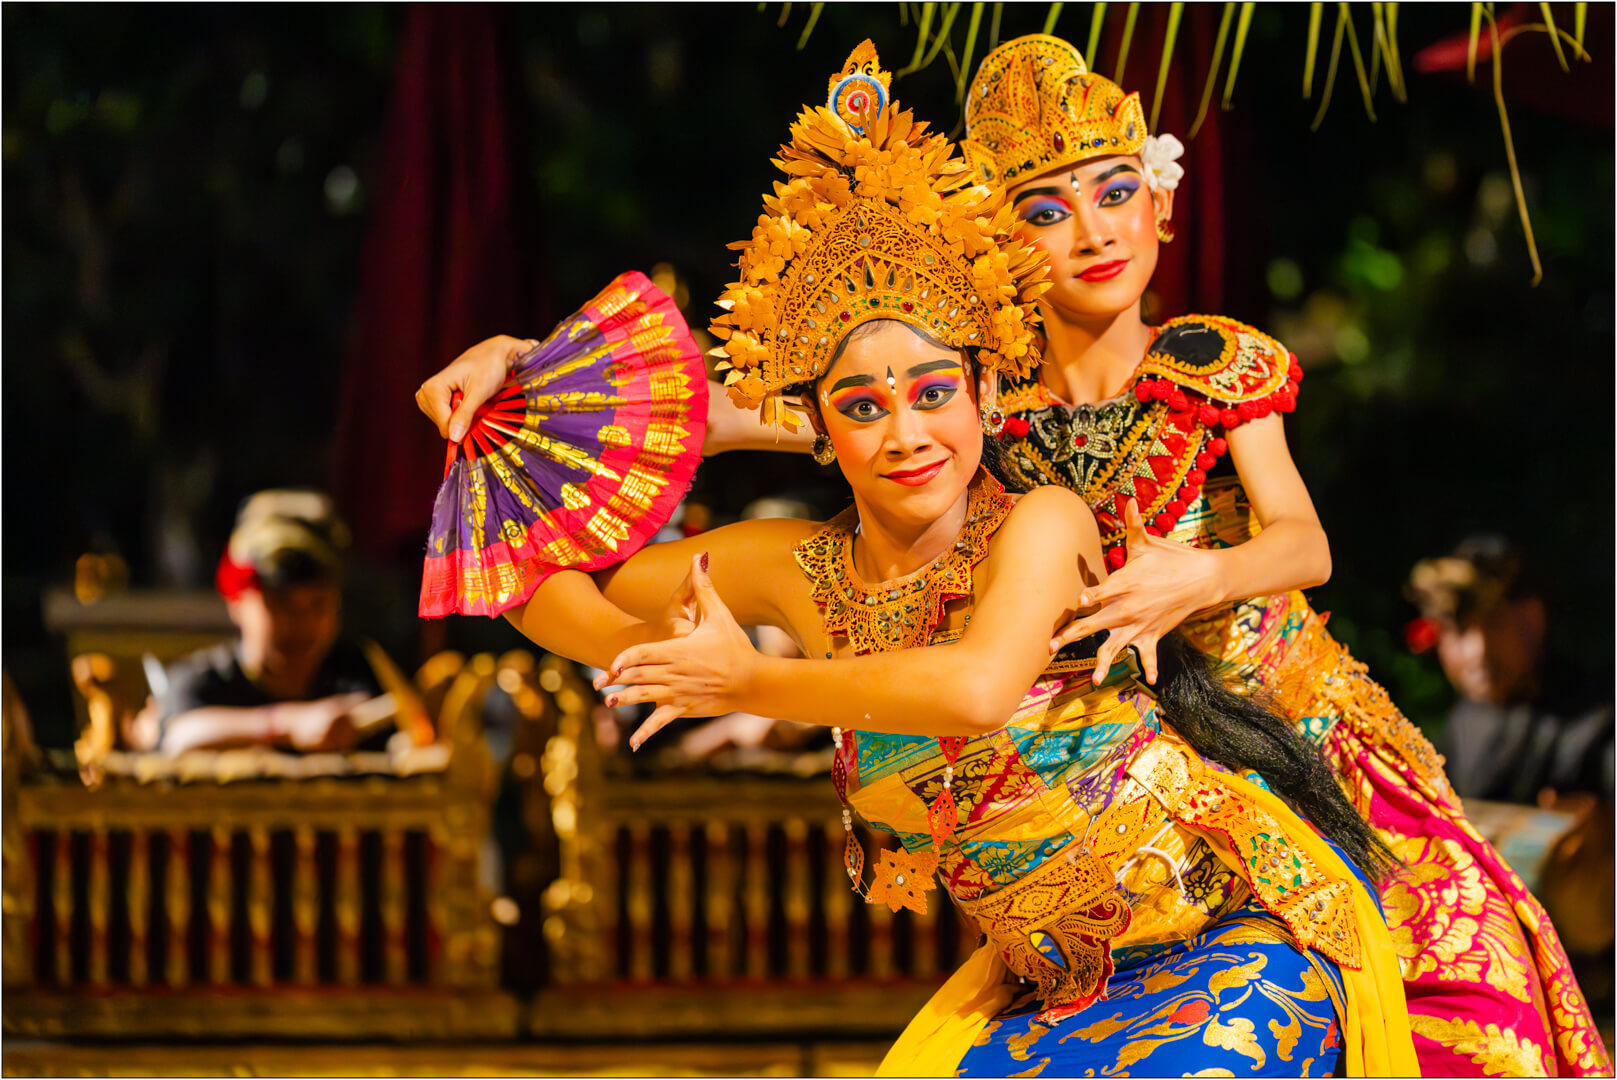 Merit For Digital Balinese Cultural Dancers By Chris Seen